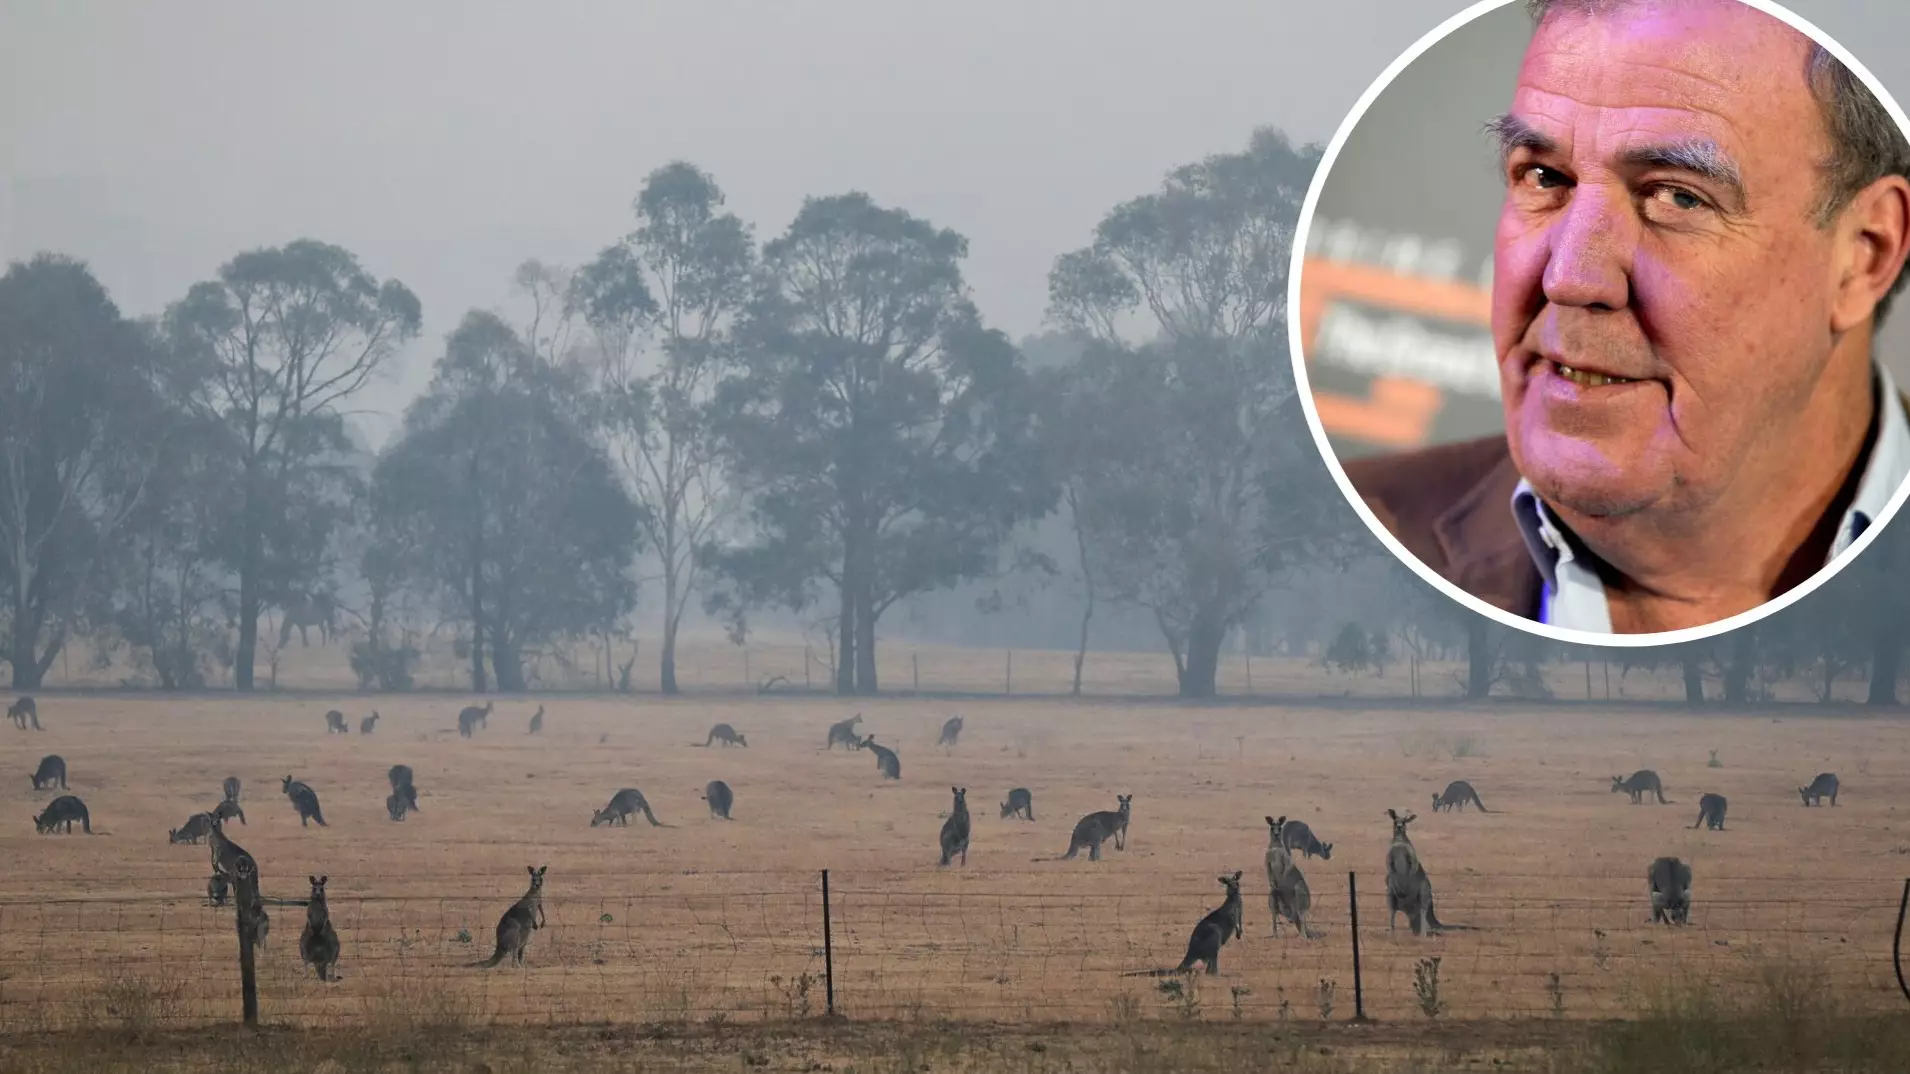 Jeremy Clarkson Blasted For Comments About Australia Bushfires